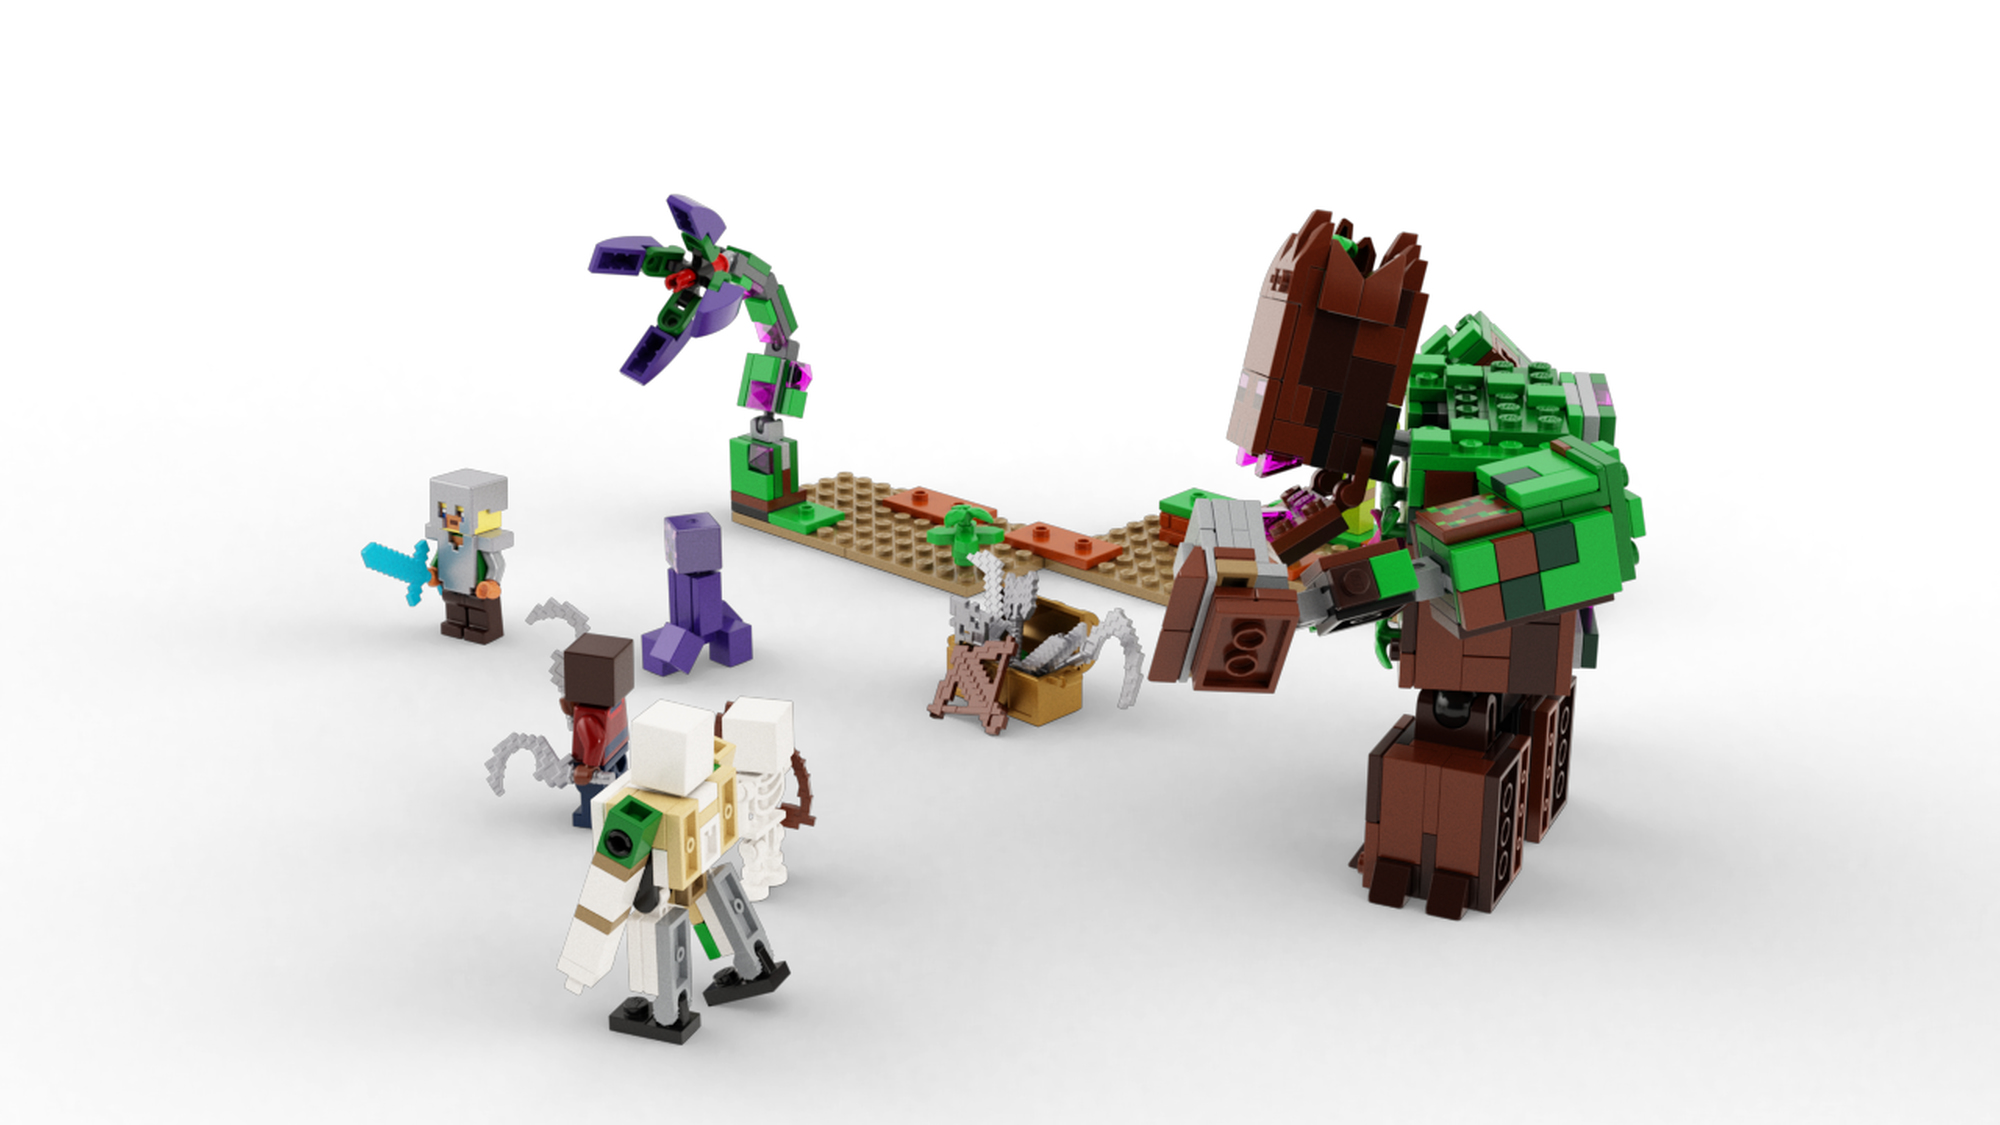 Lego Minecraft O Horror da Selva - Lego 21176 - UPA STORE